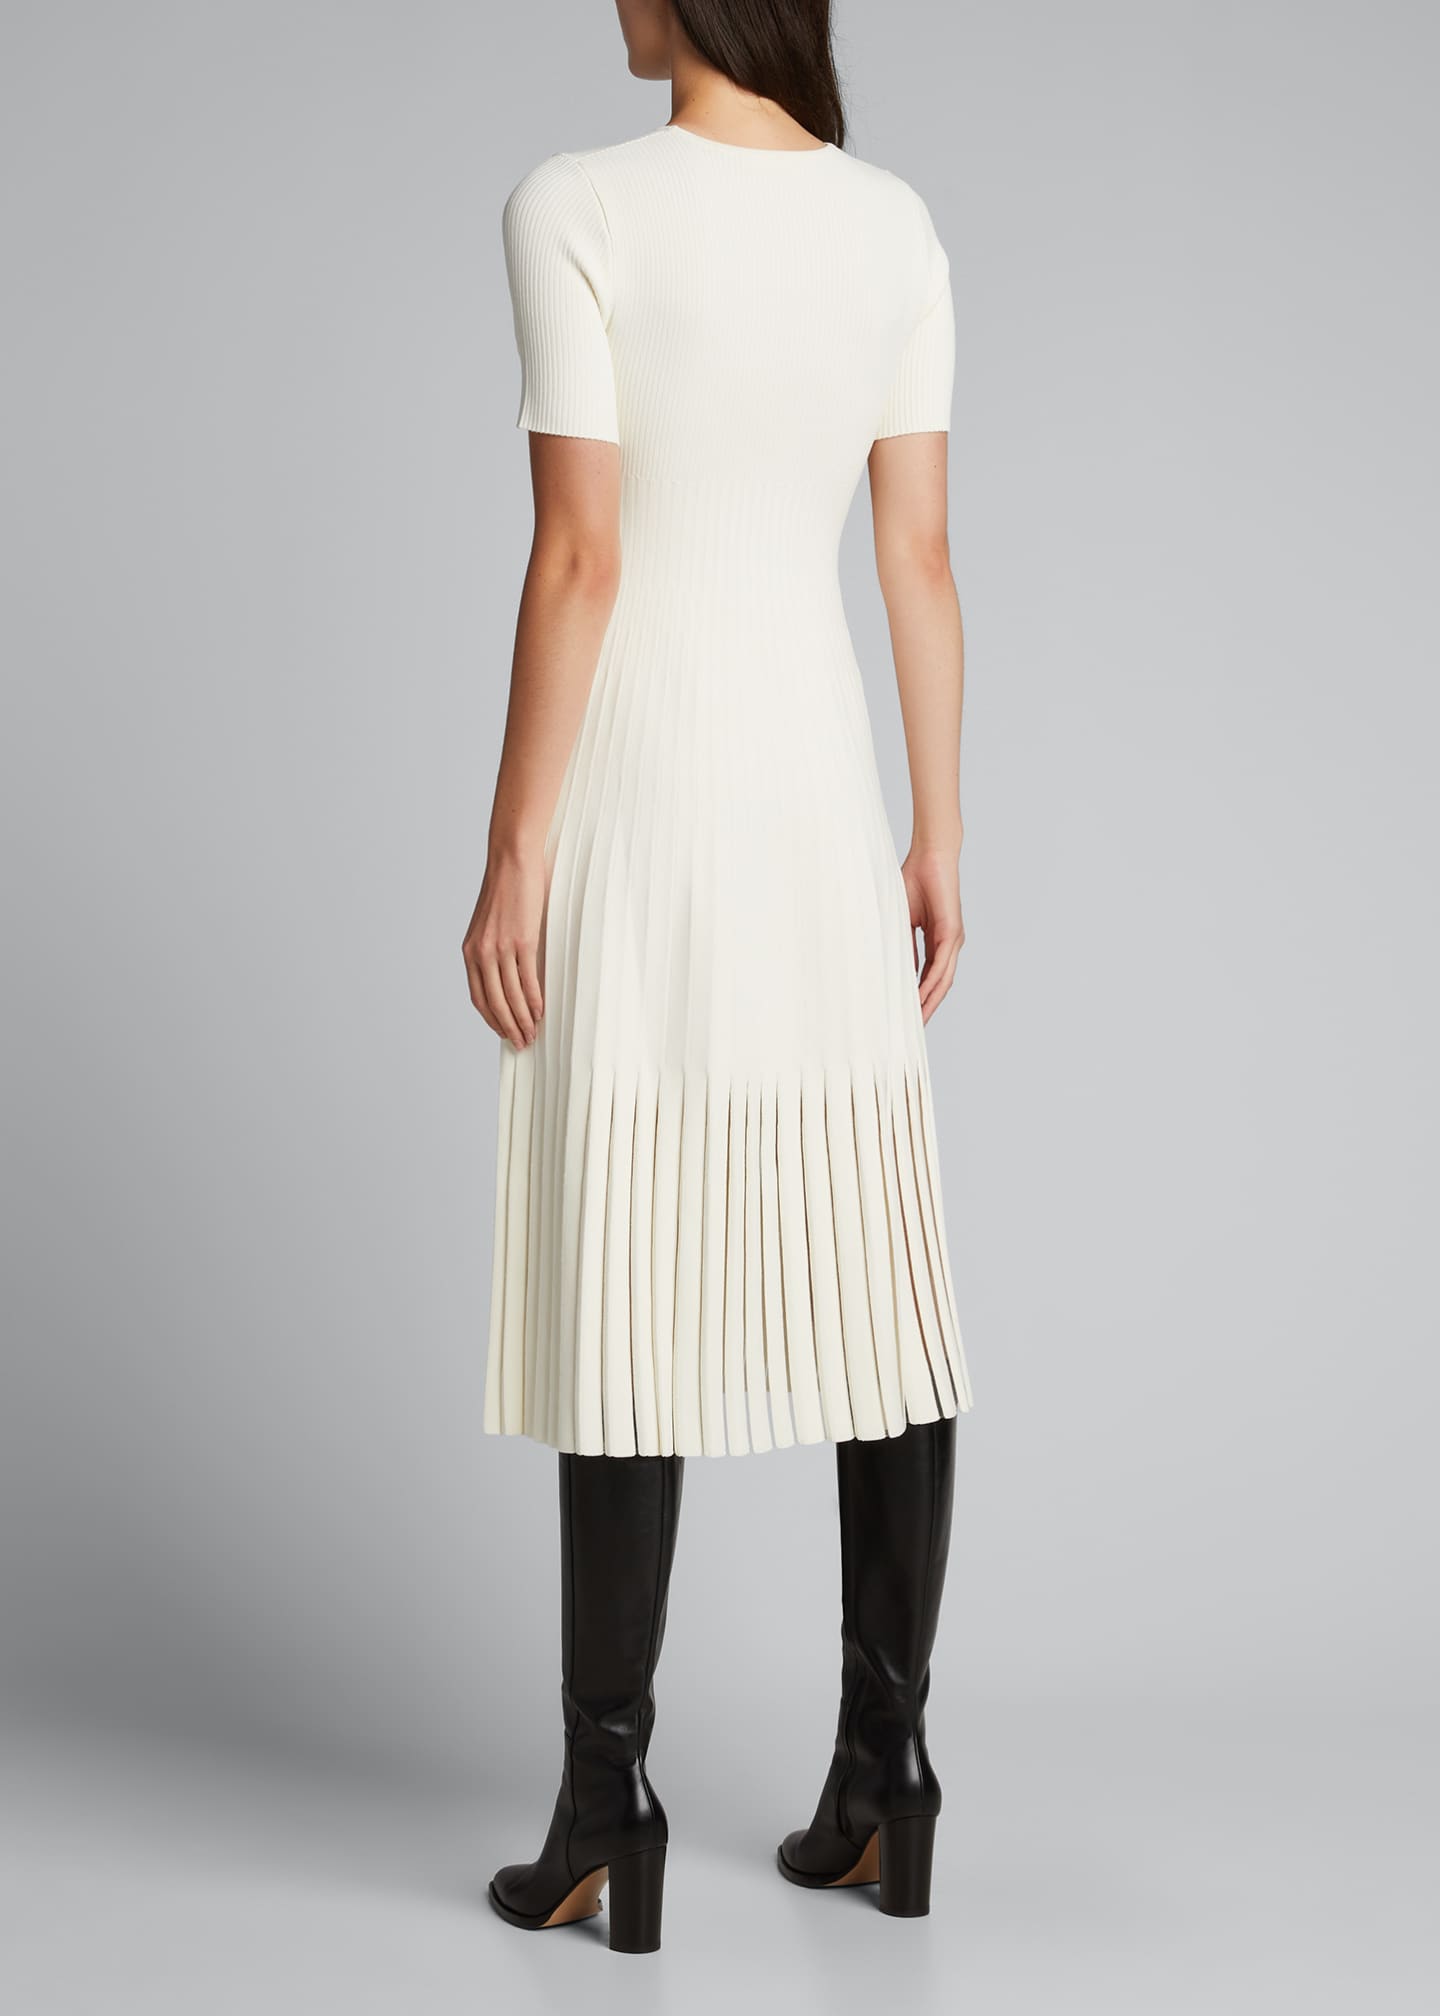 Jason Wu Collection Knit Sheer Godet Midi Dress - Bergdorf Goodman